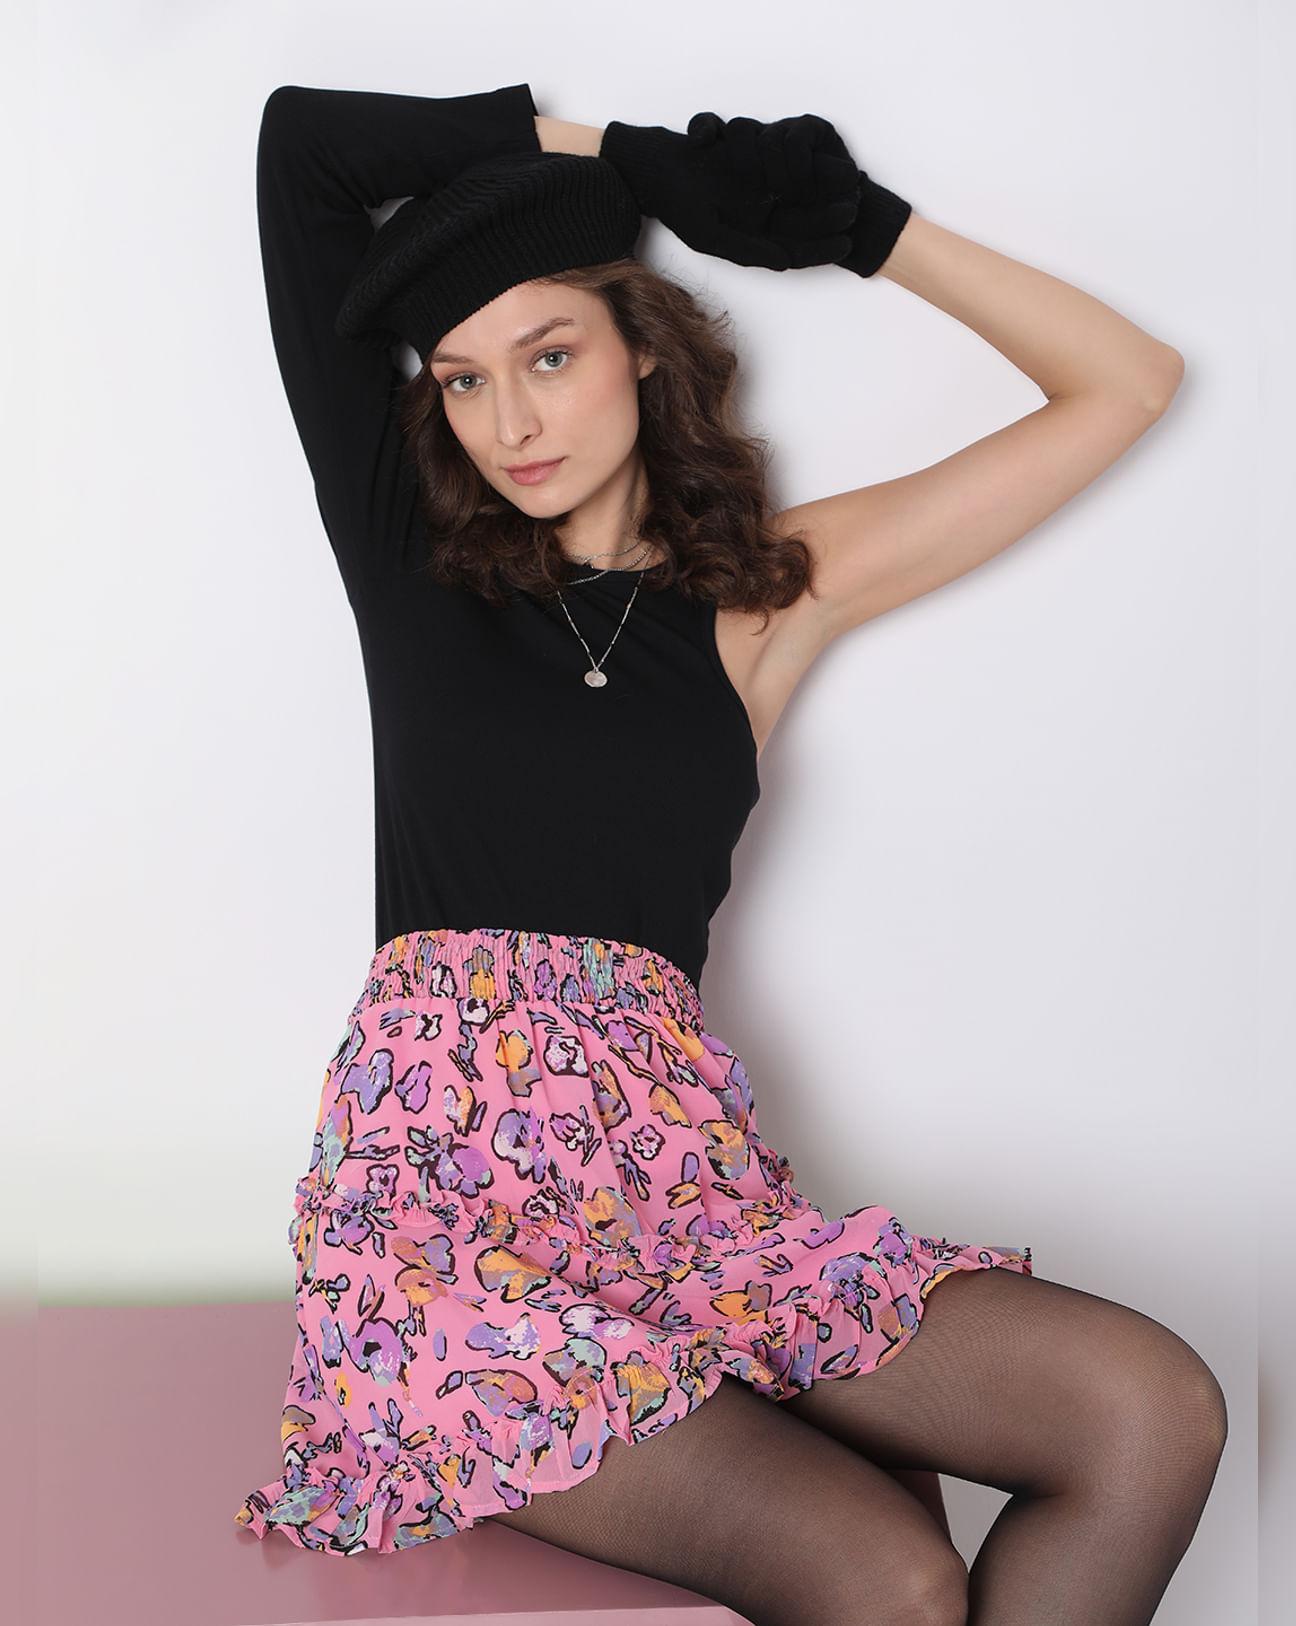 pink floral frill skirt